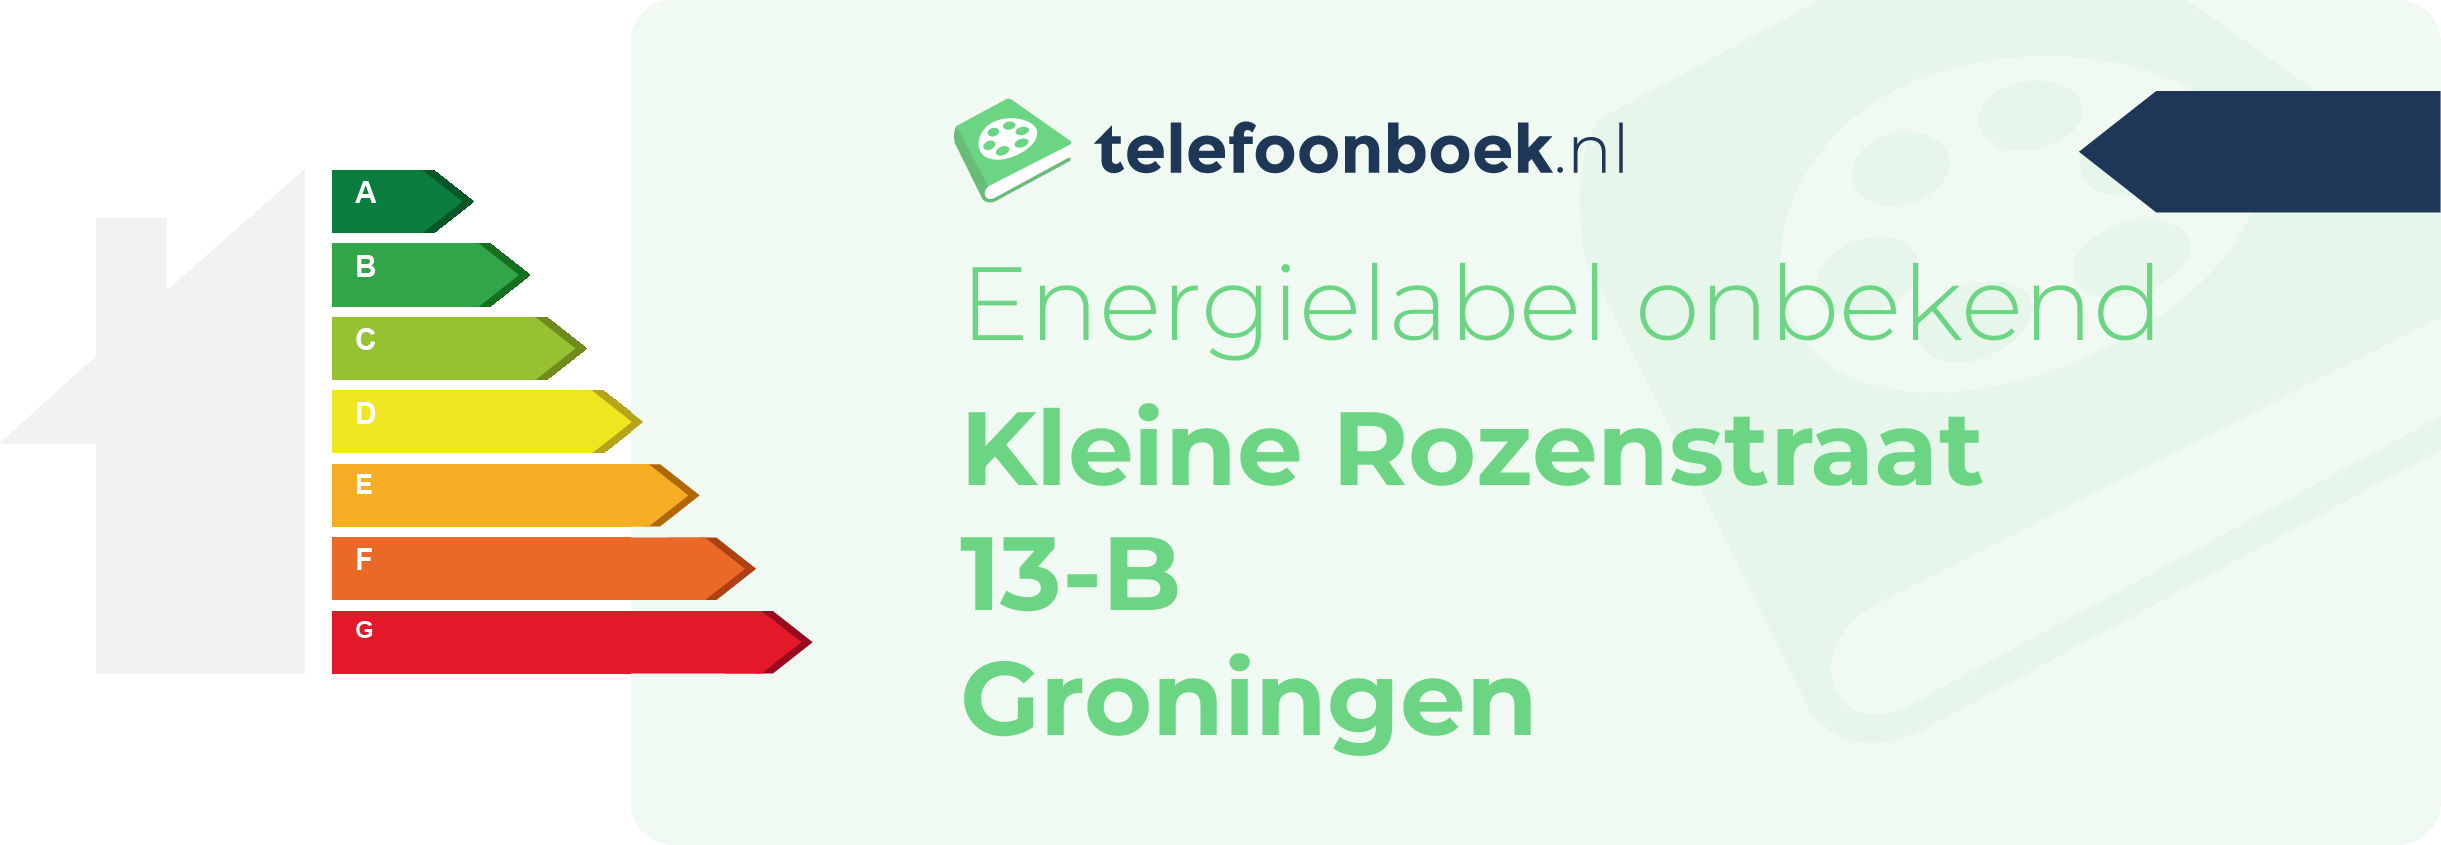 Energielabel Kleine Rozenstraat 13-B Groningen